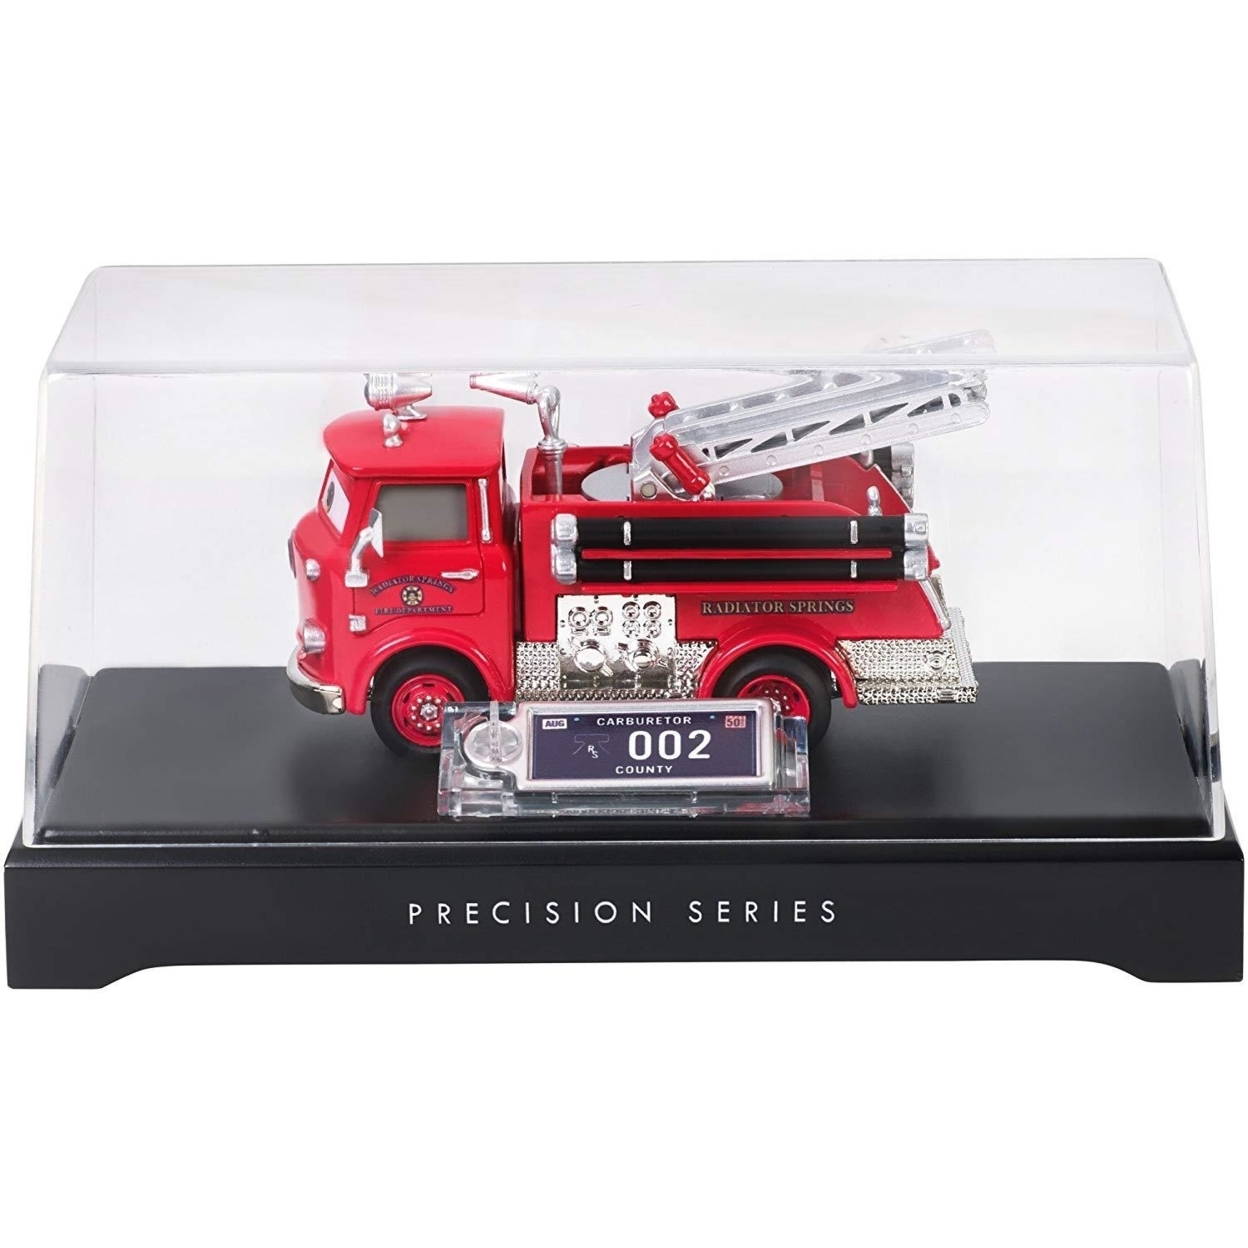 Disney Pixar Cars 3 Red Fire Truck Precision Series 002 Die-Cast Movie Mattel